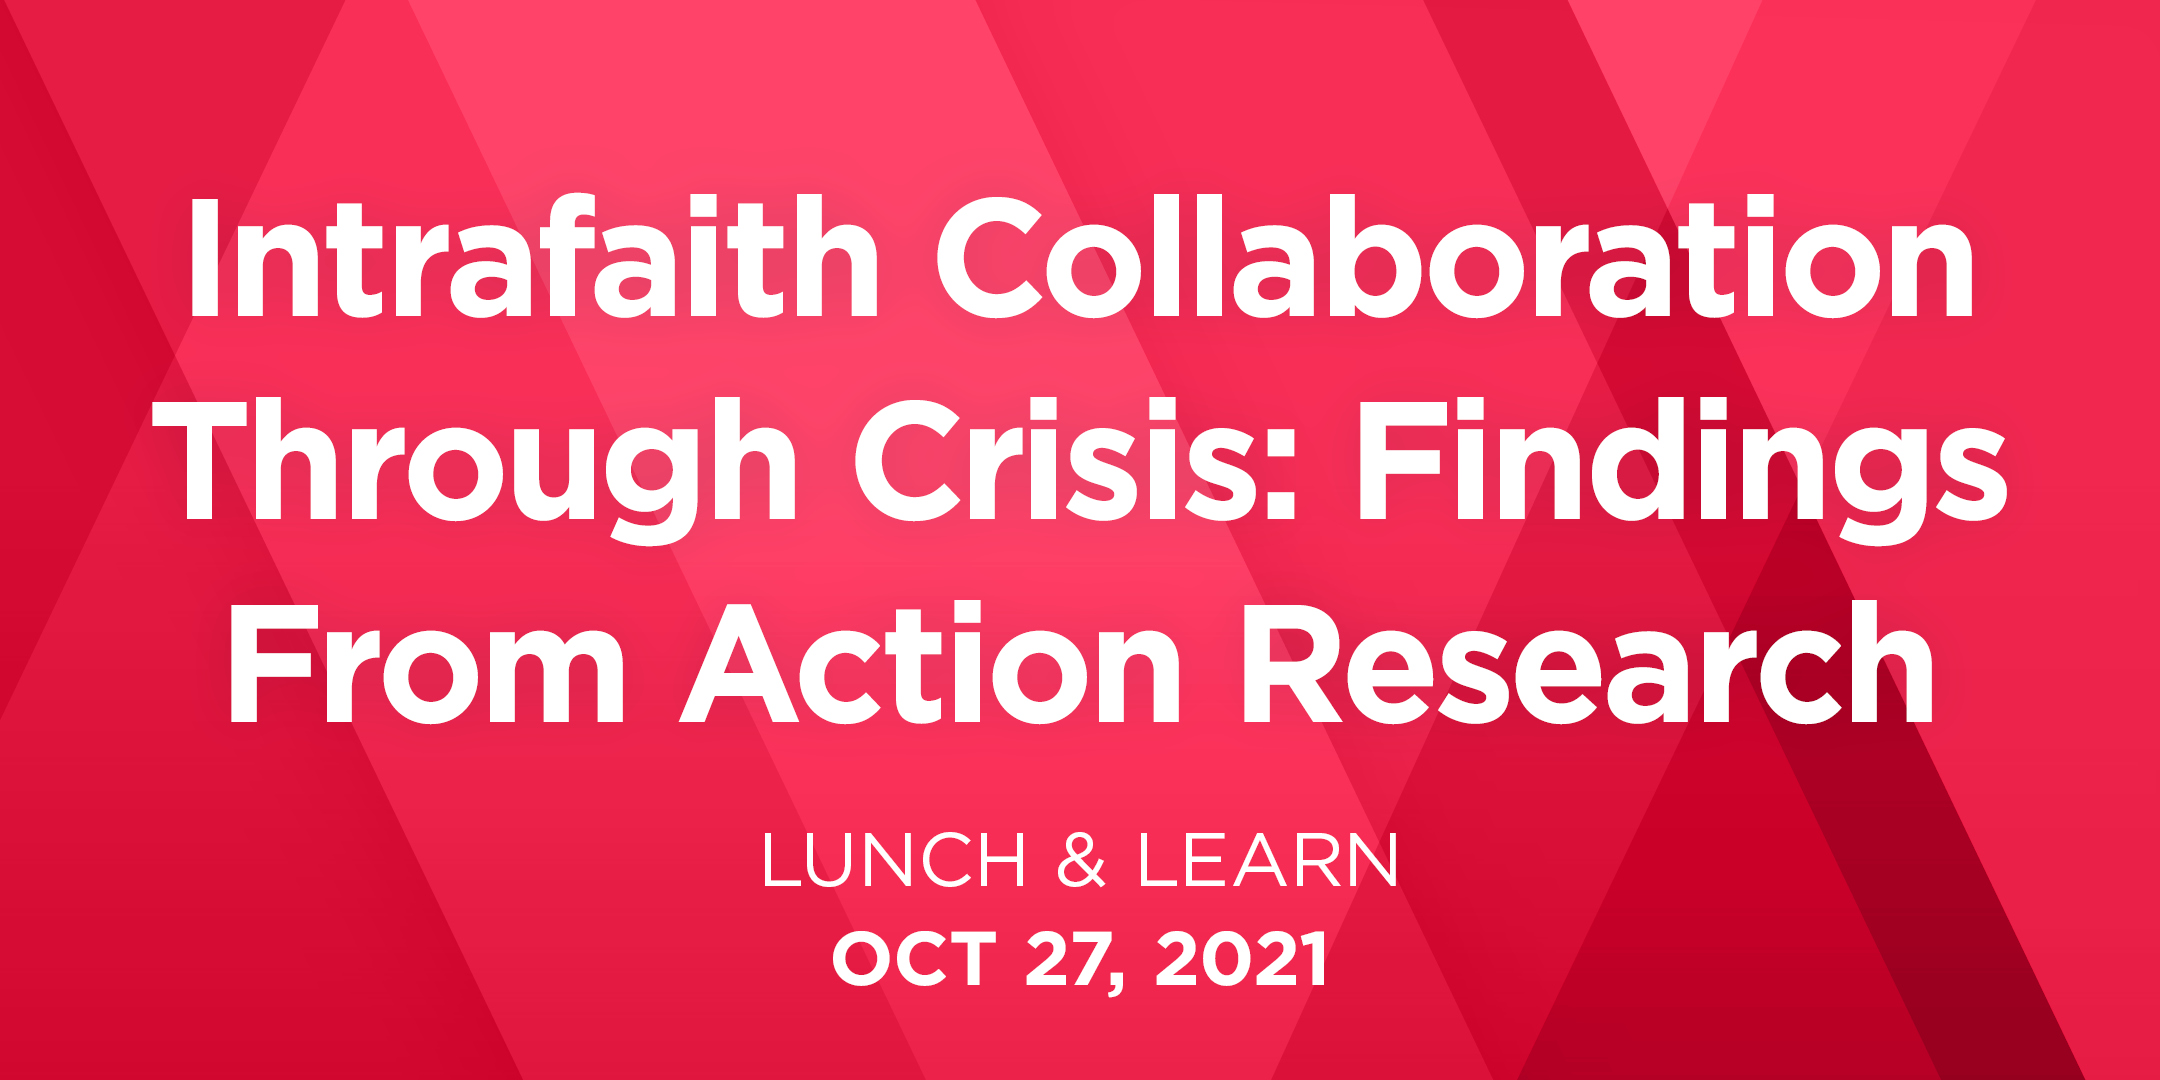 Intrafaith Collaboration Through Crisis